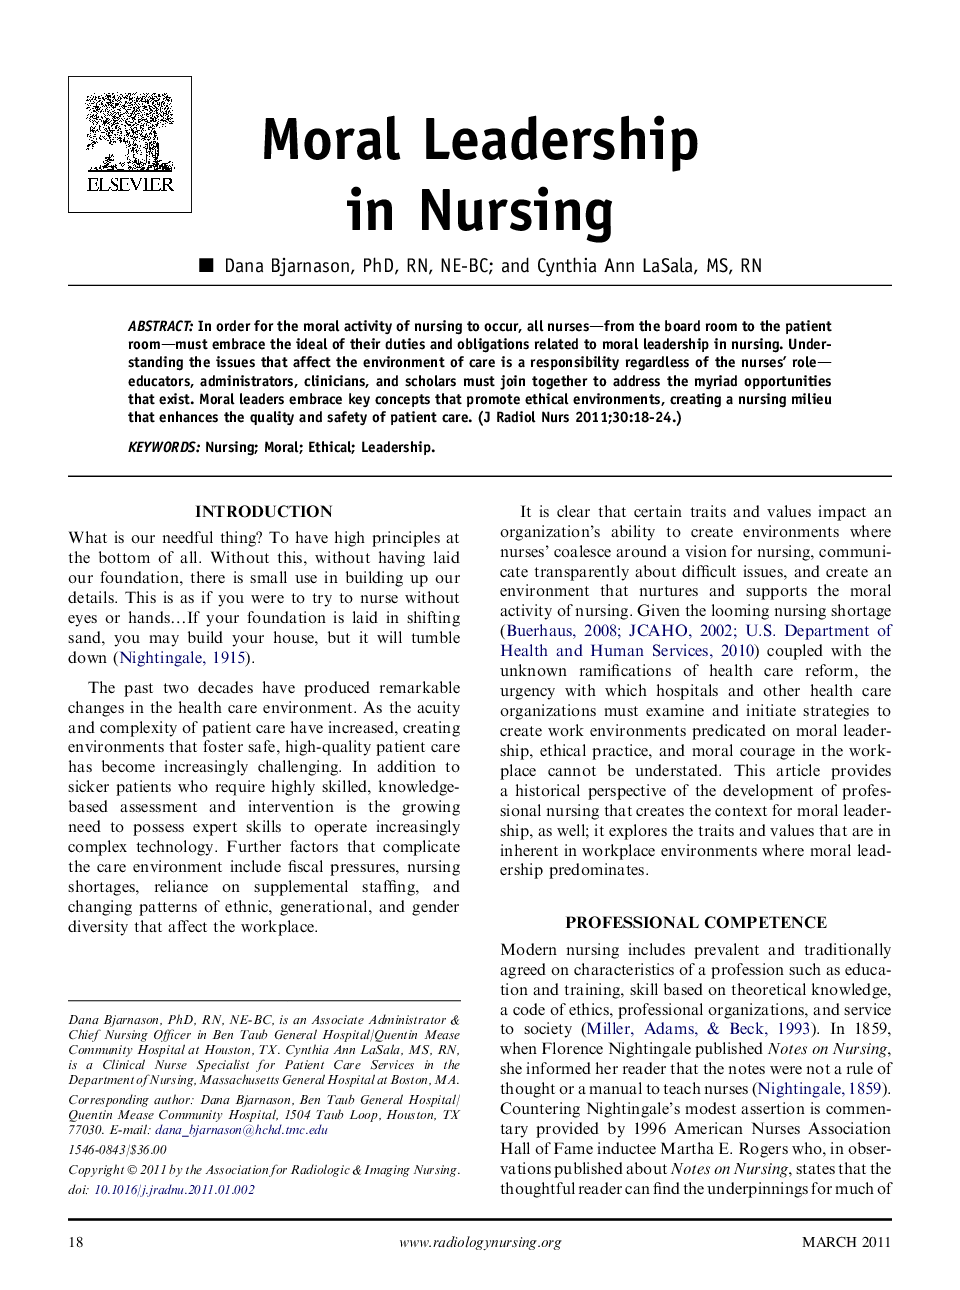 Moral Leadership in Nursing